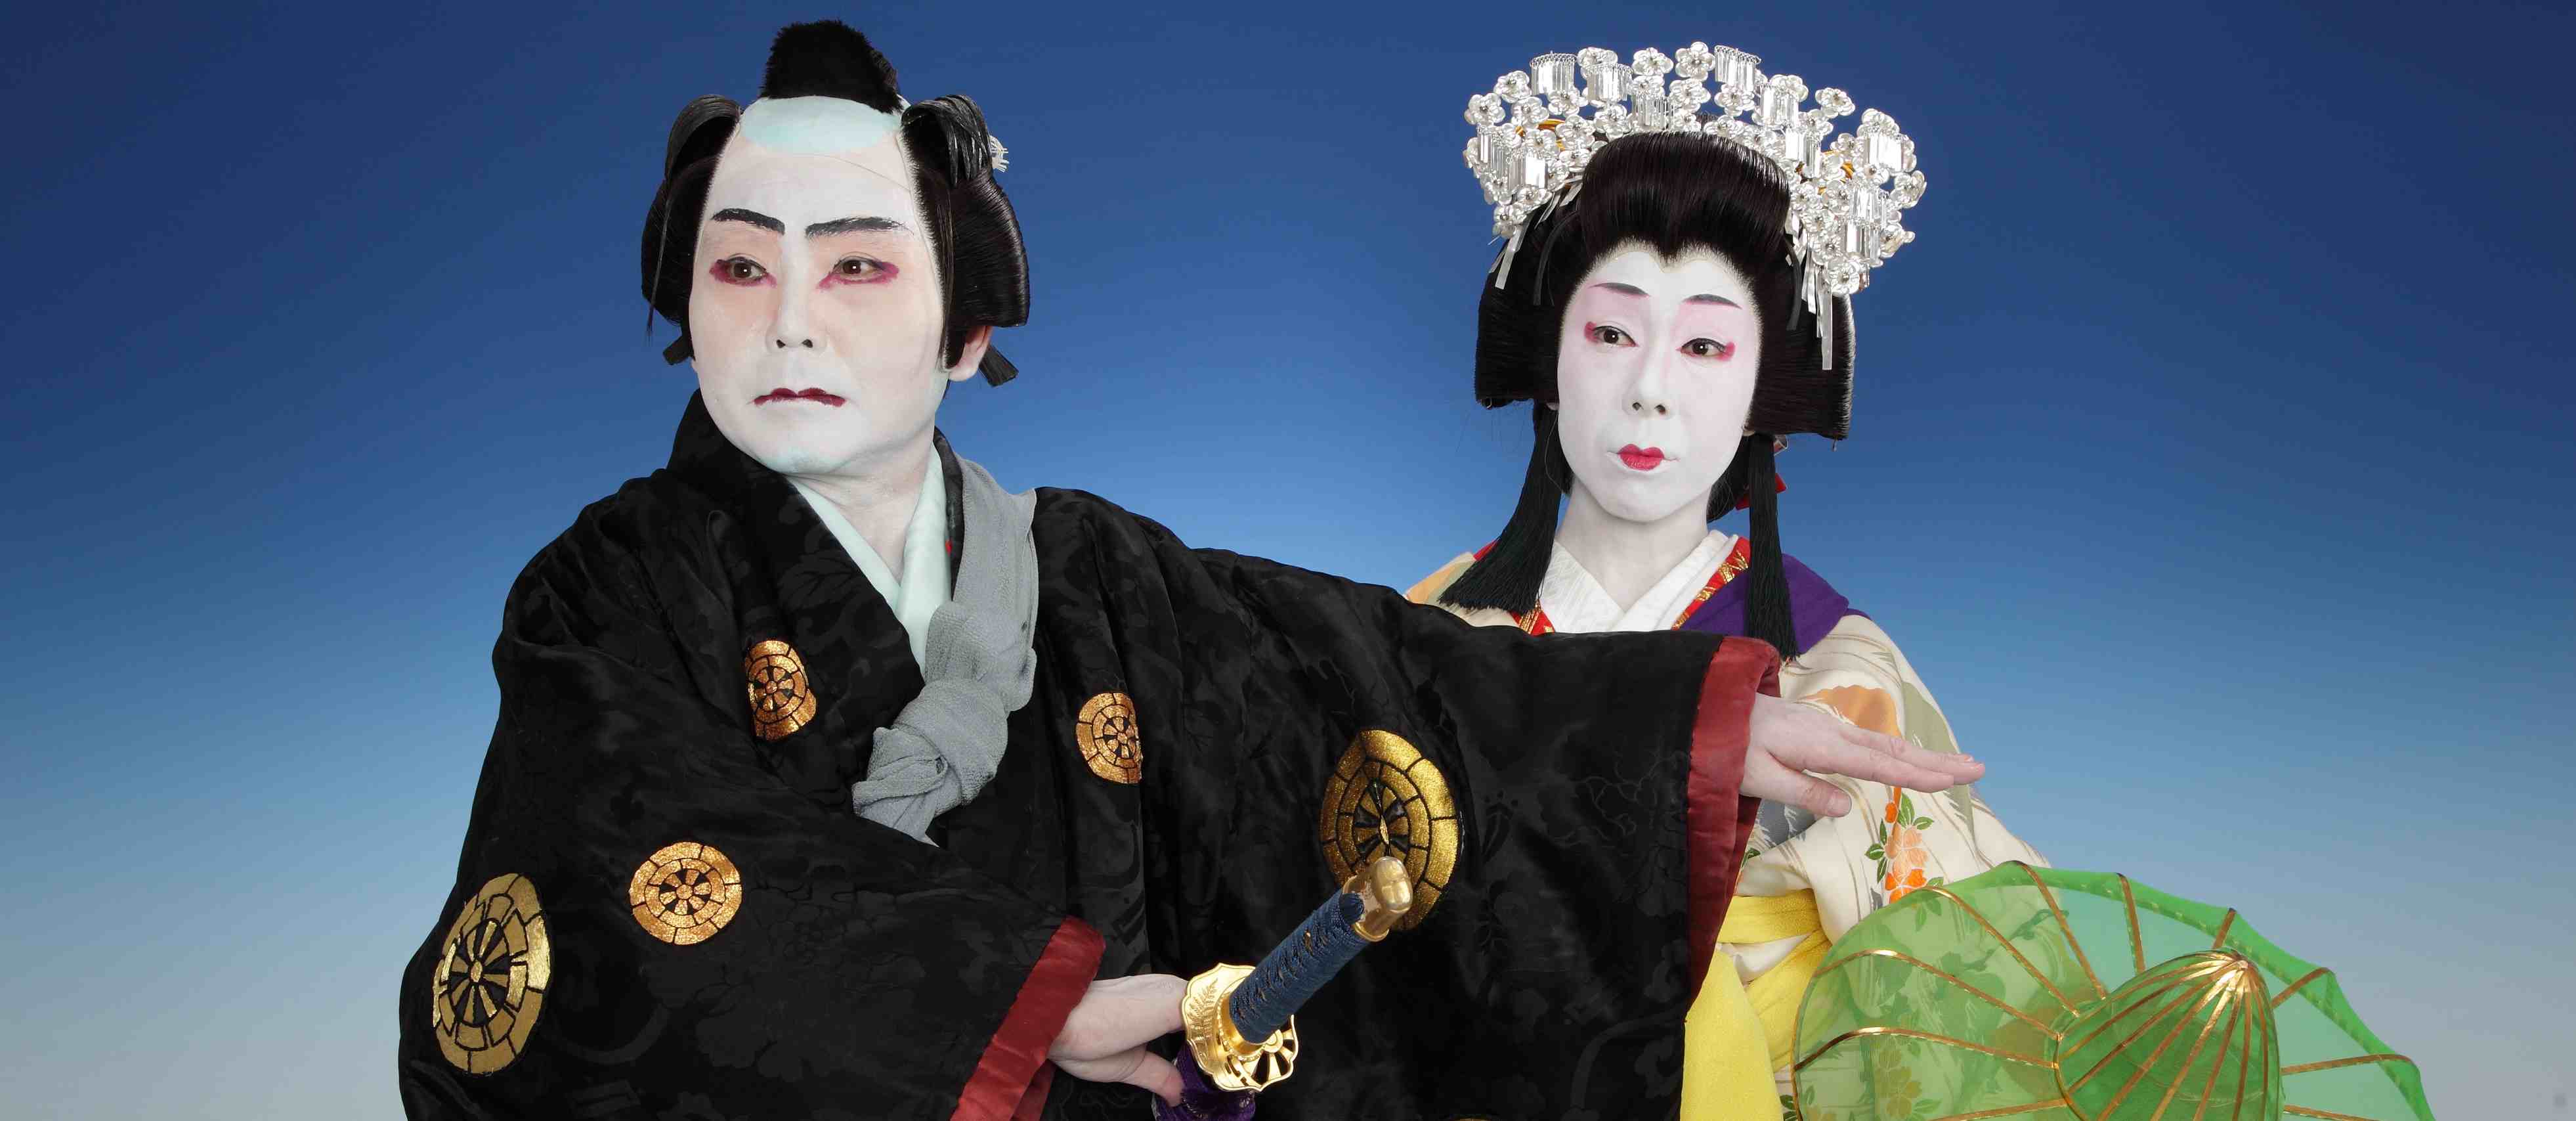 High Resolution Wallpaper | Kabuki 3924x1707 px